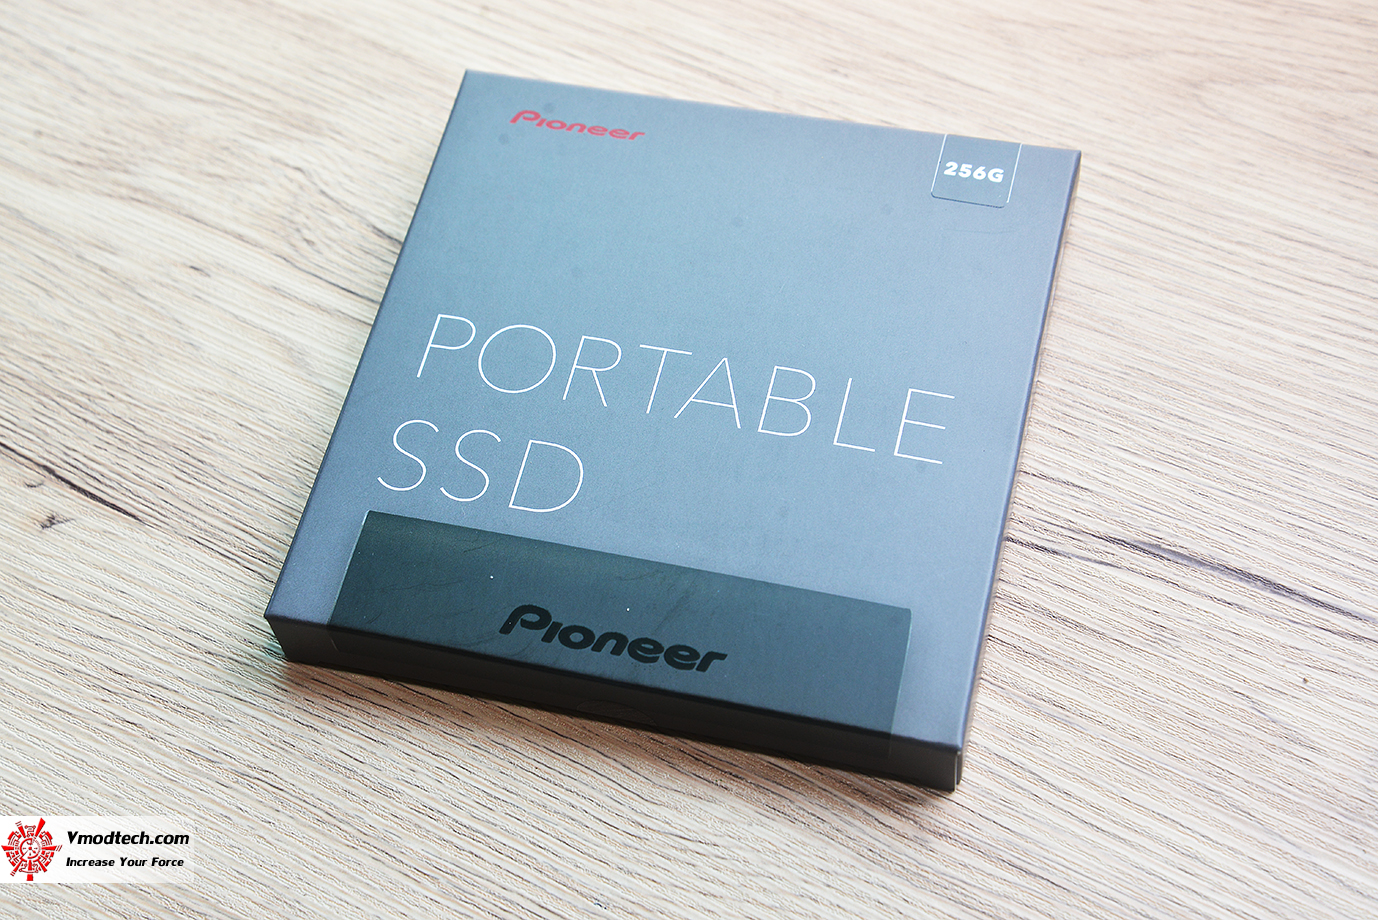 dsc 1633 PIONEER PORTABLE SSD 256G APS XS05 PRO REVIEW 